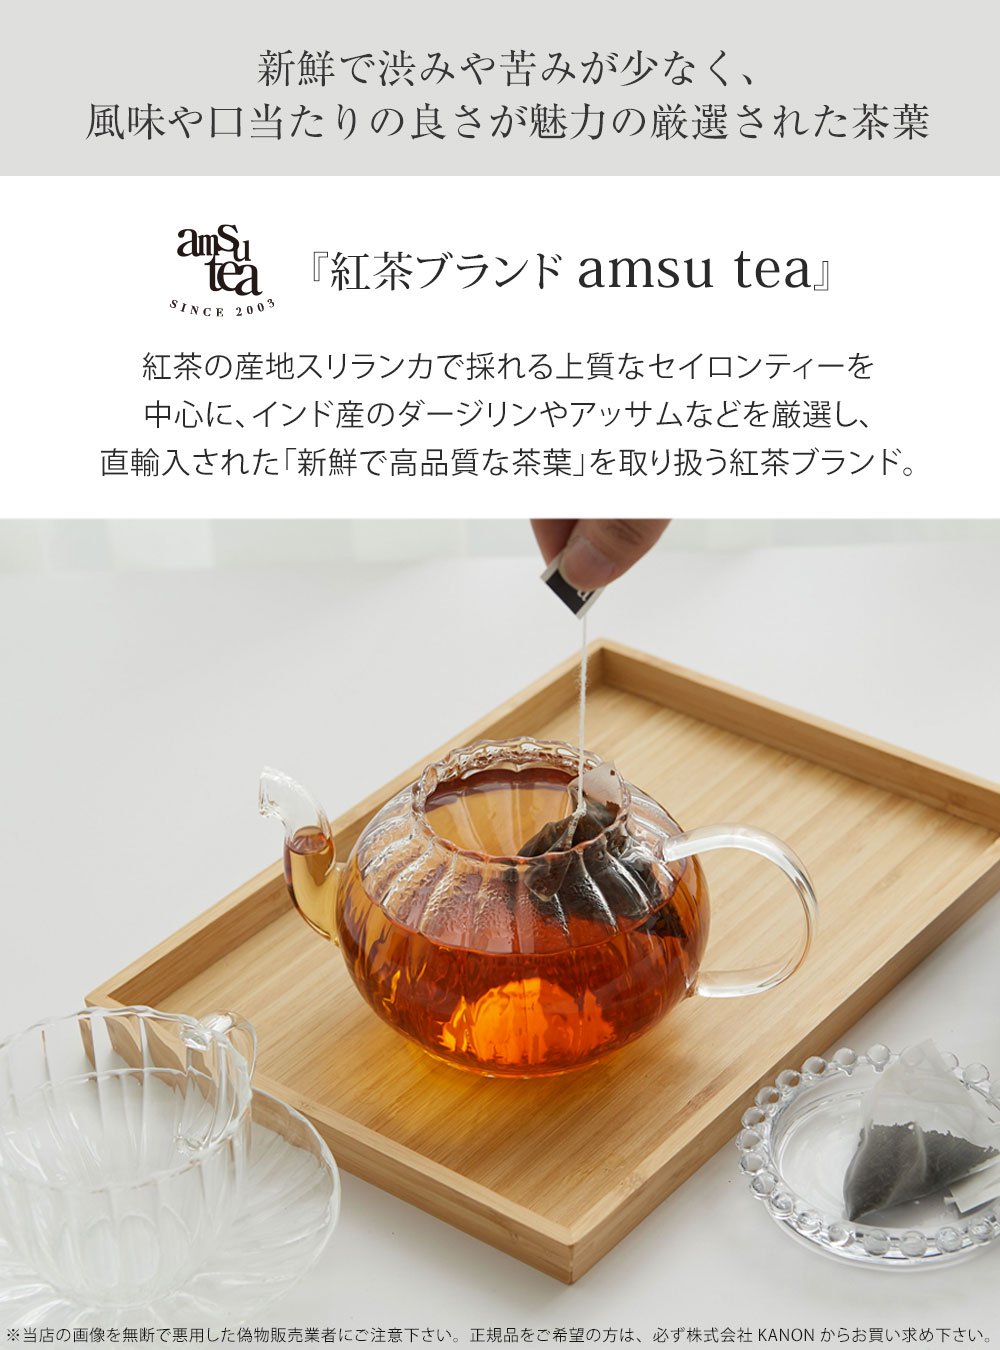 amsu tea アムシュティー 紅茶 テ